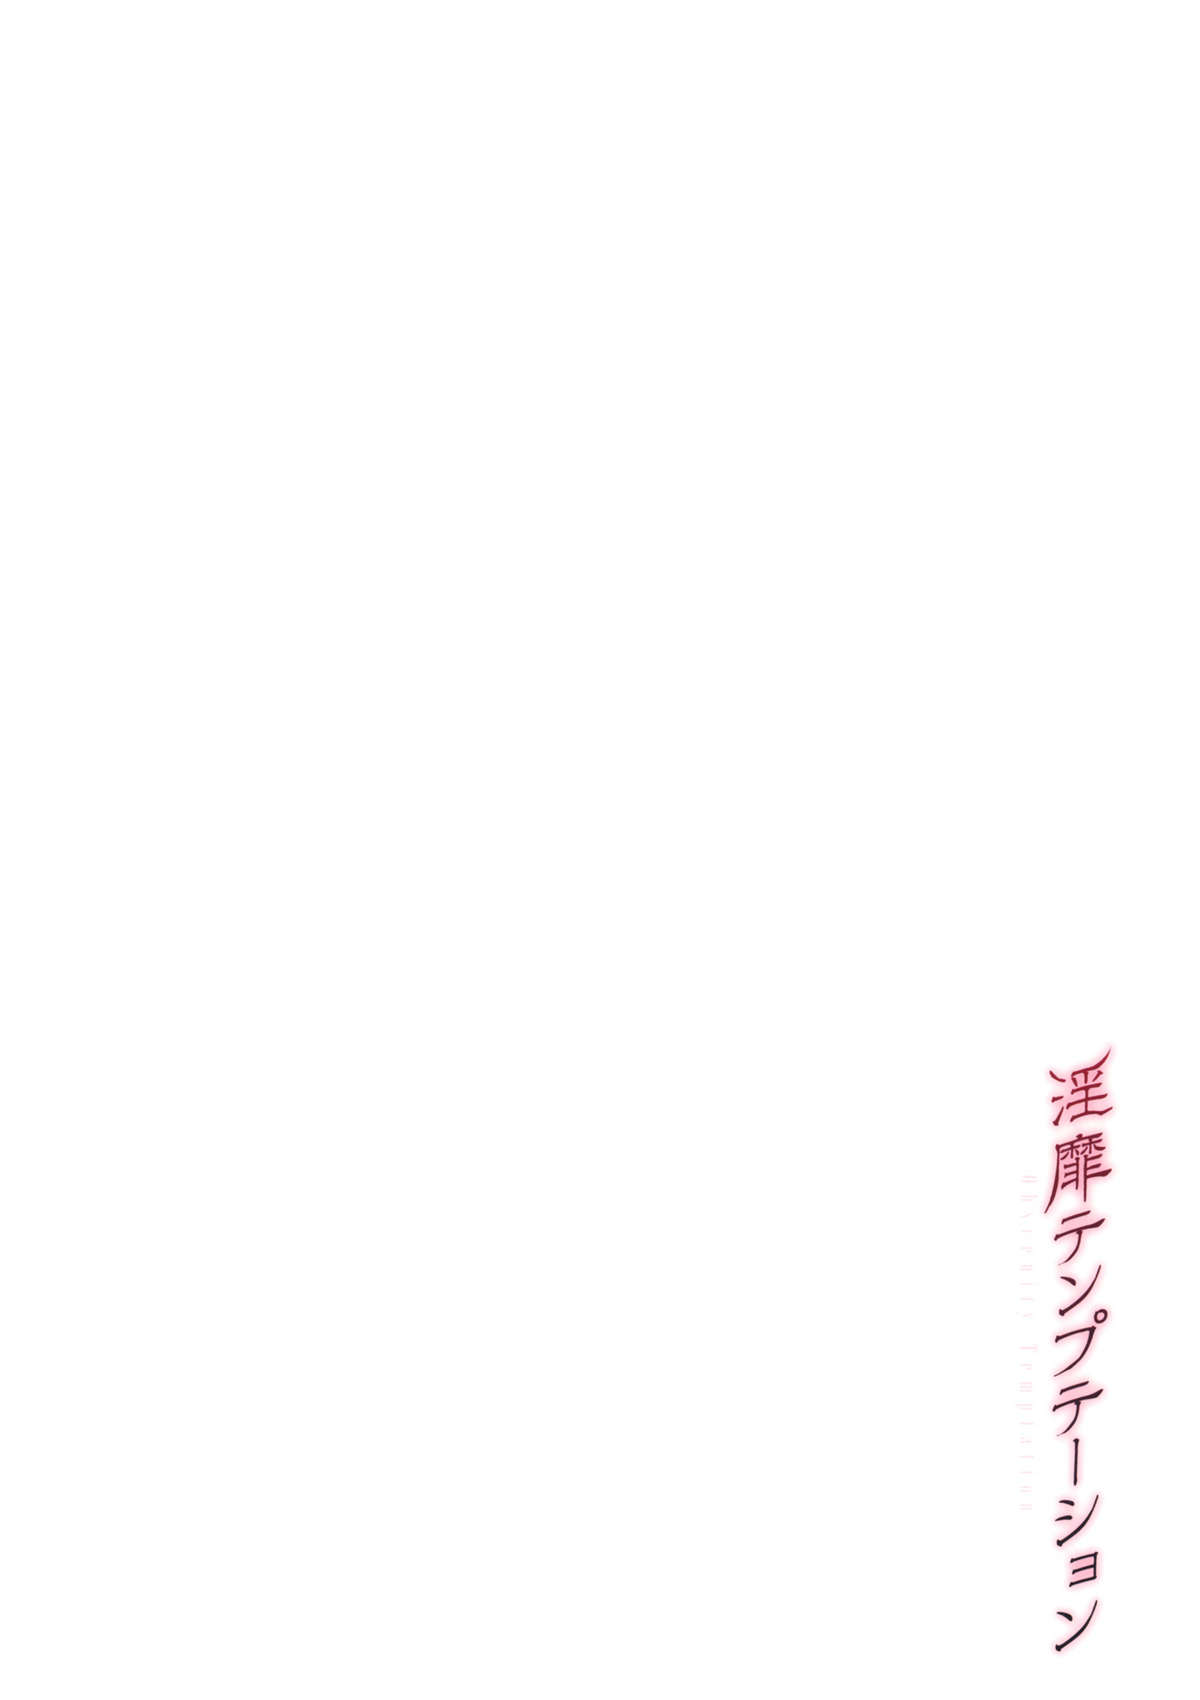 [inkey] Inbi Temptation [inkey] 淫靡テンプテーション [11-02-17]